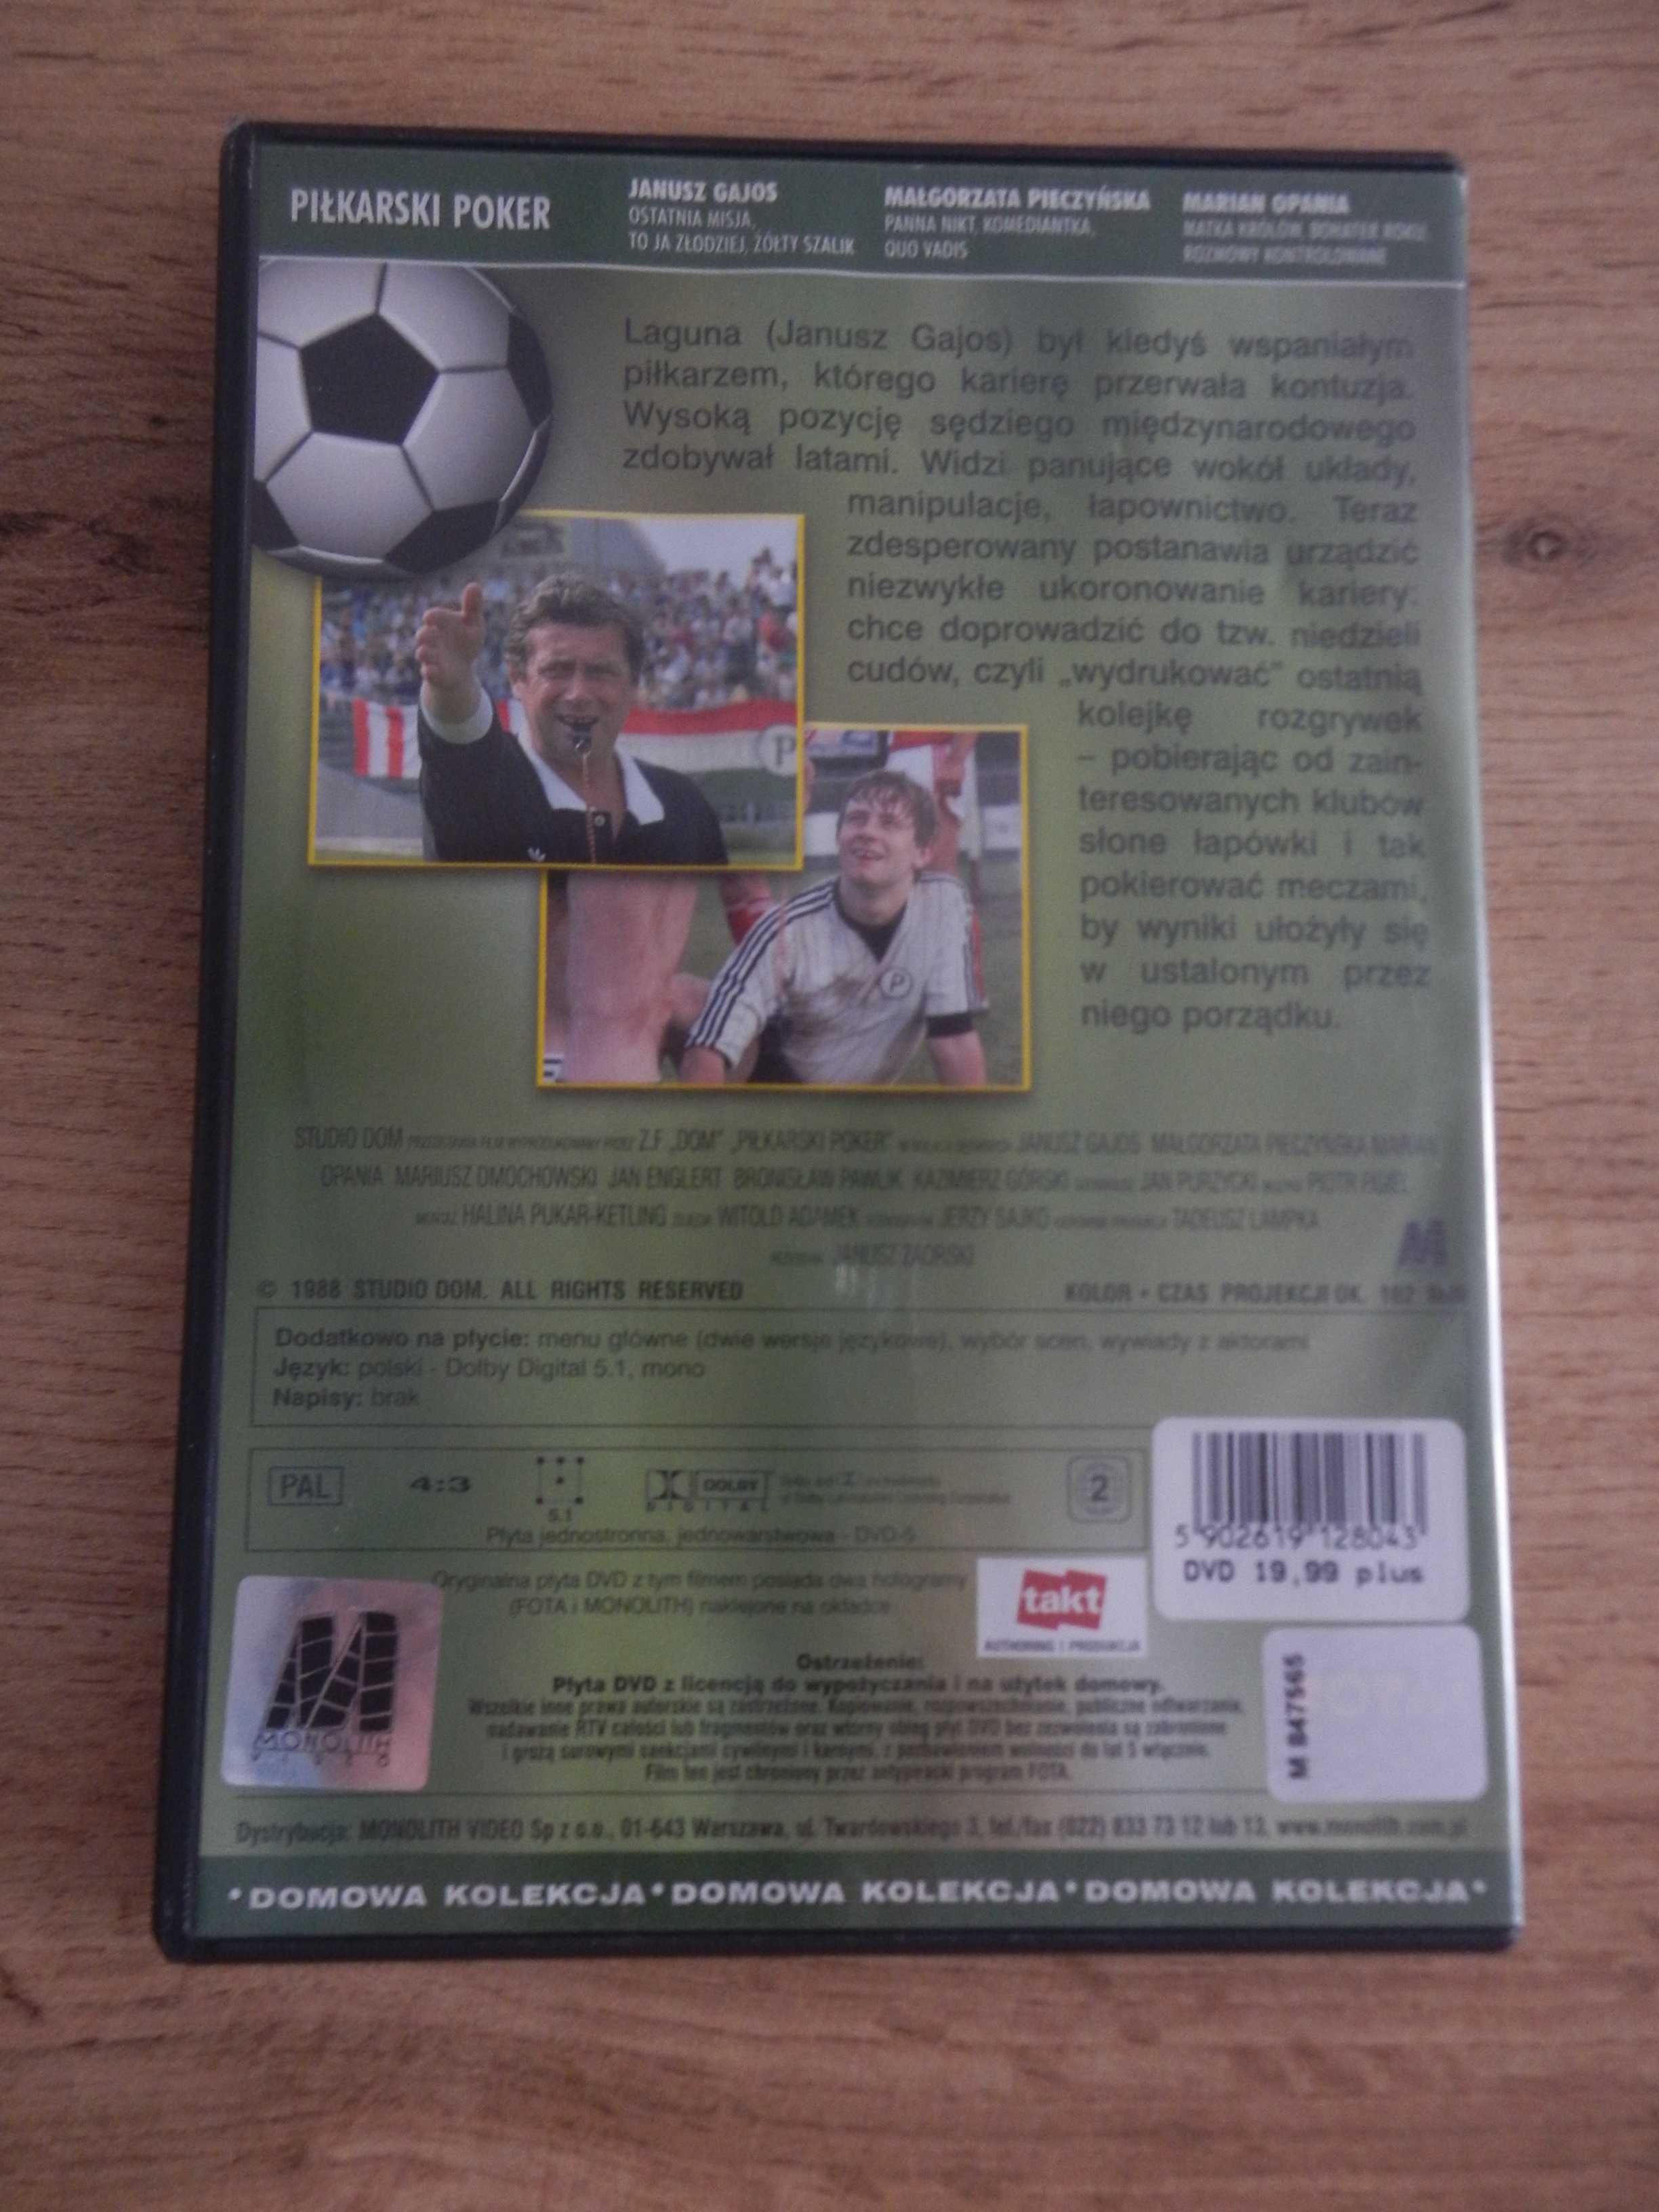 Film Piłkarski Poker płyta DVD